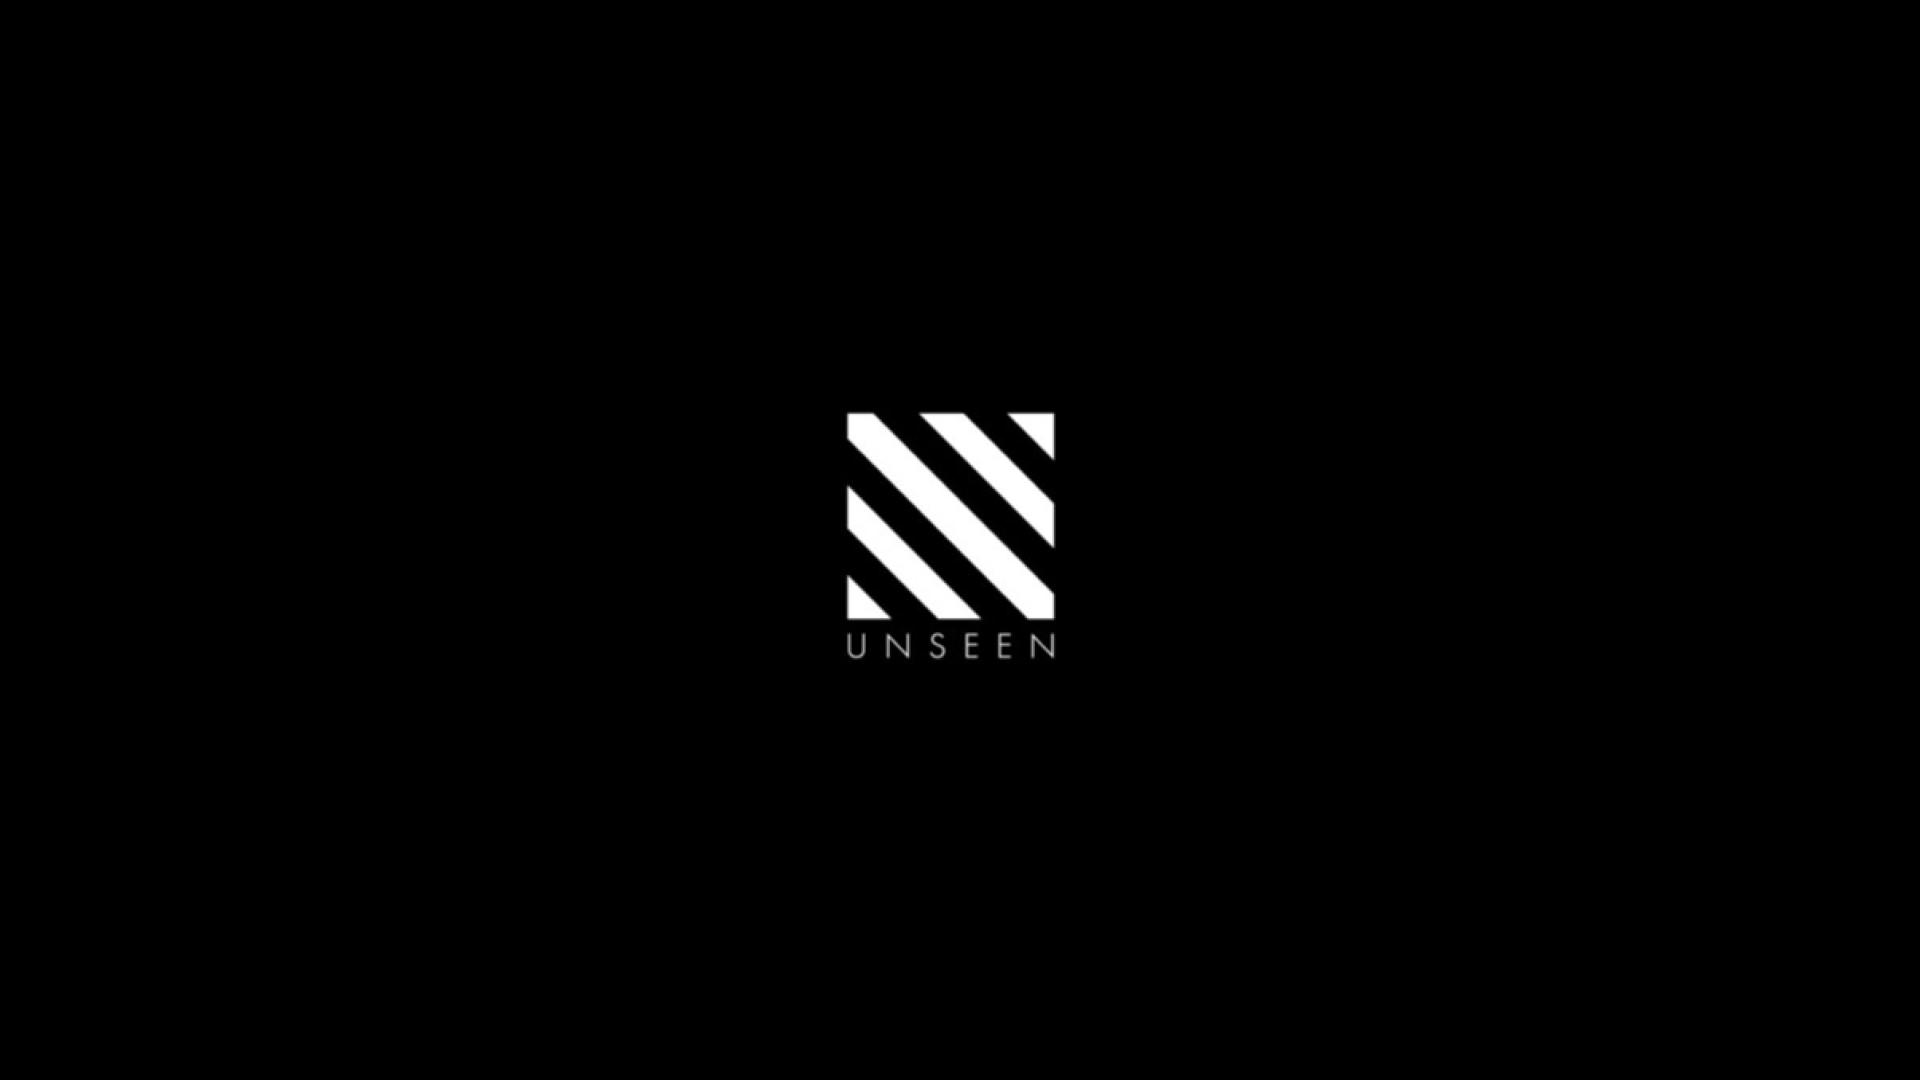 تأسیس استودیو مستقل Unseen توسط کارگردان سابق Ghostwire: Tokyo